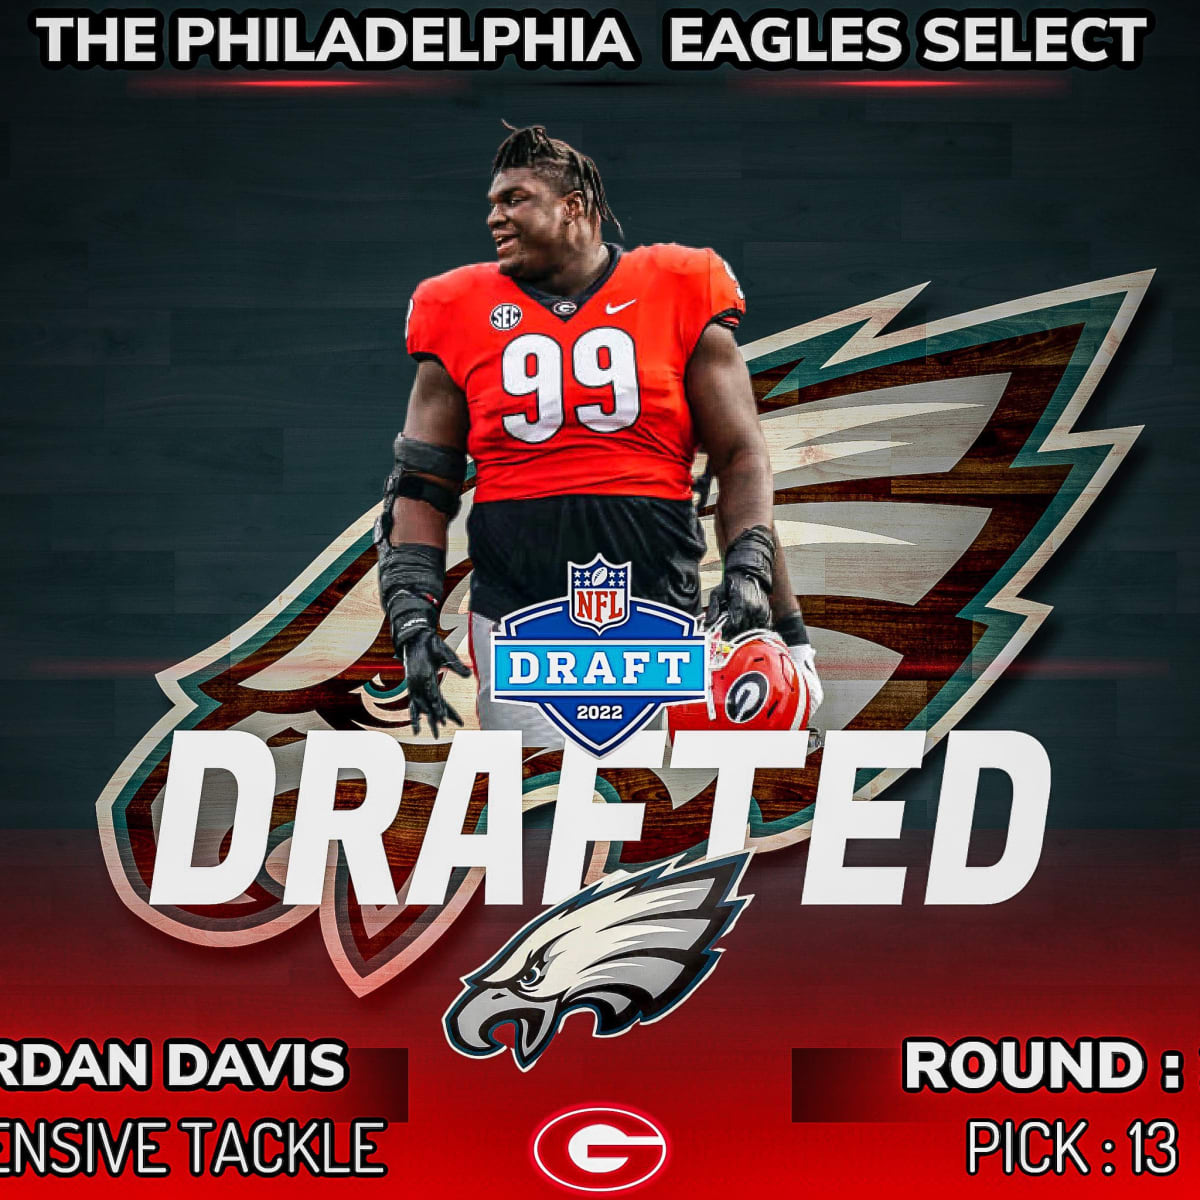 Georgia DL Jordan Davis selected in first round of 2022 NFL draft